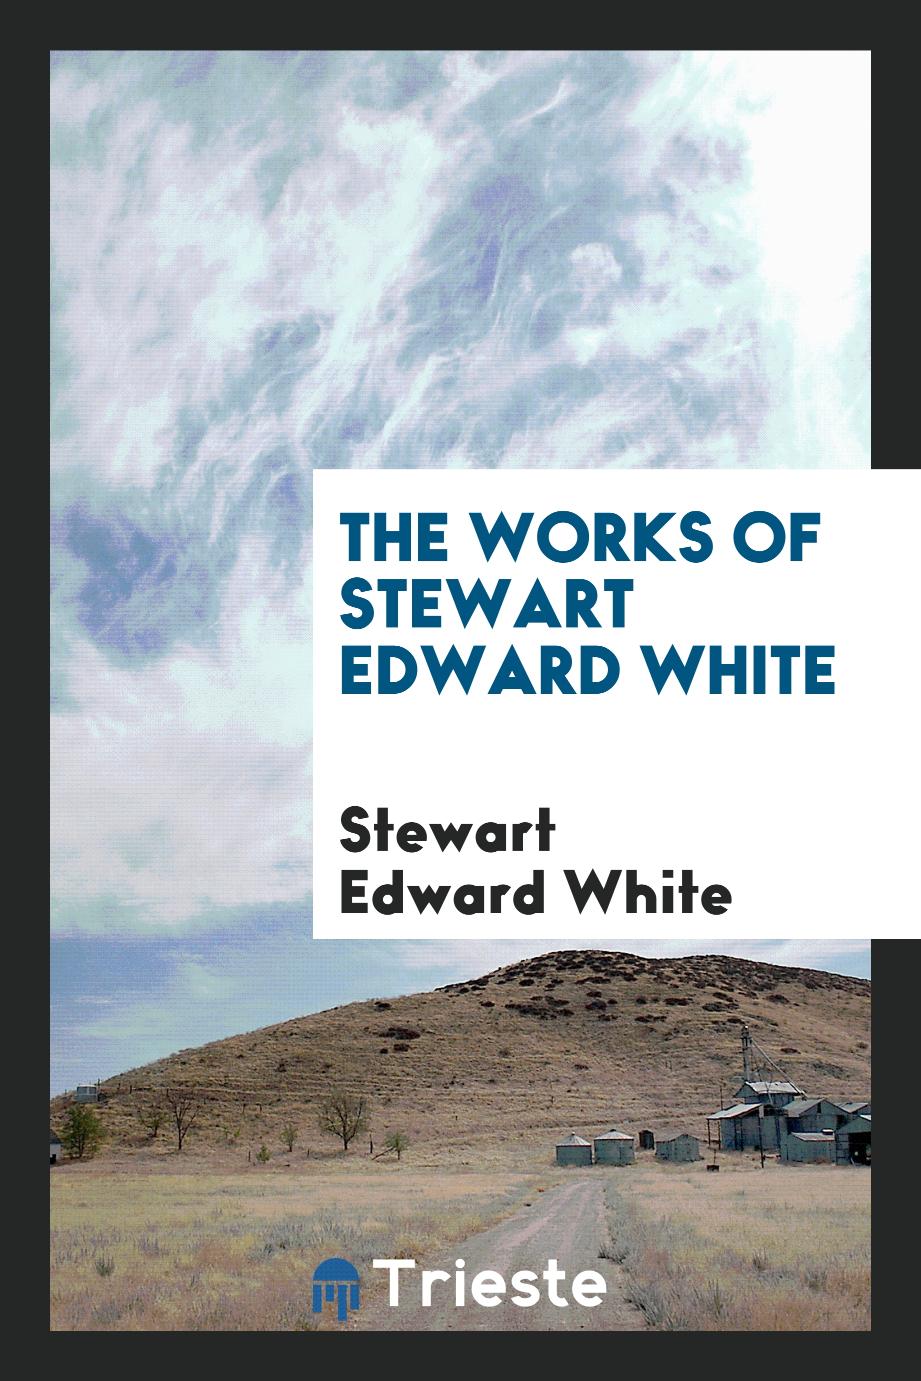 The works of Stewart Edward White